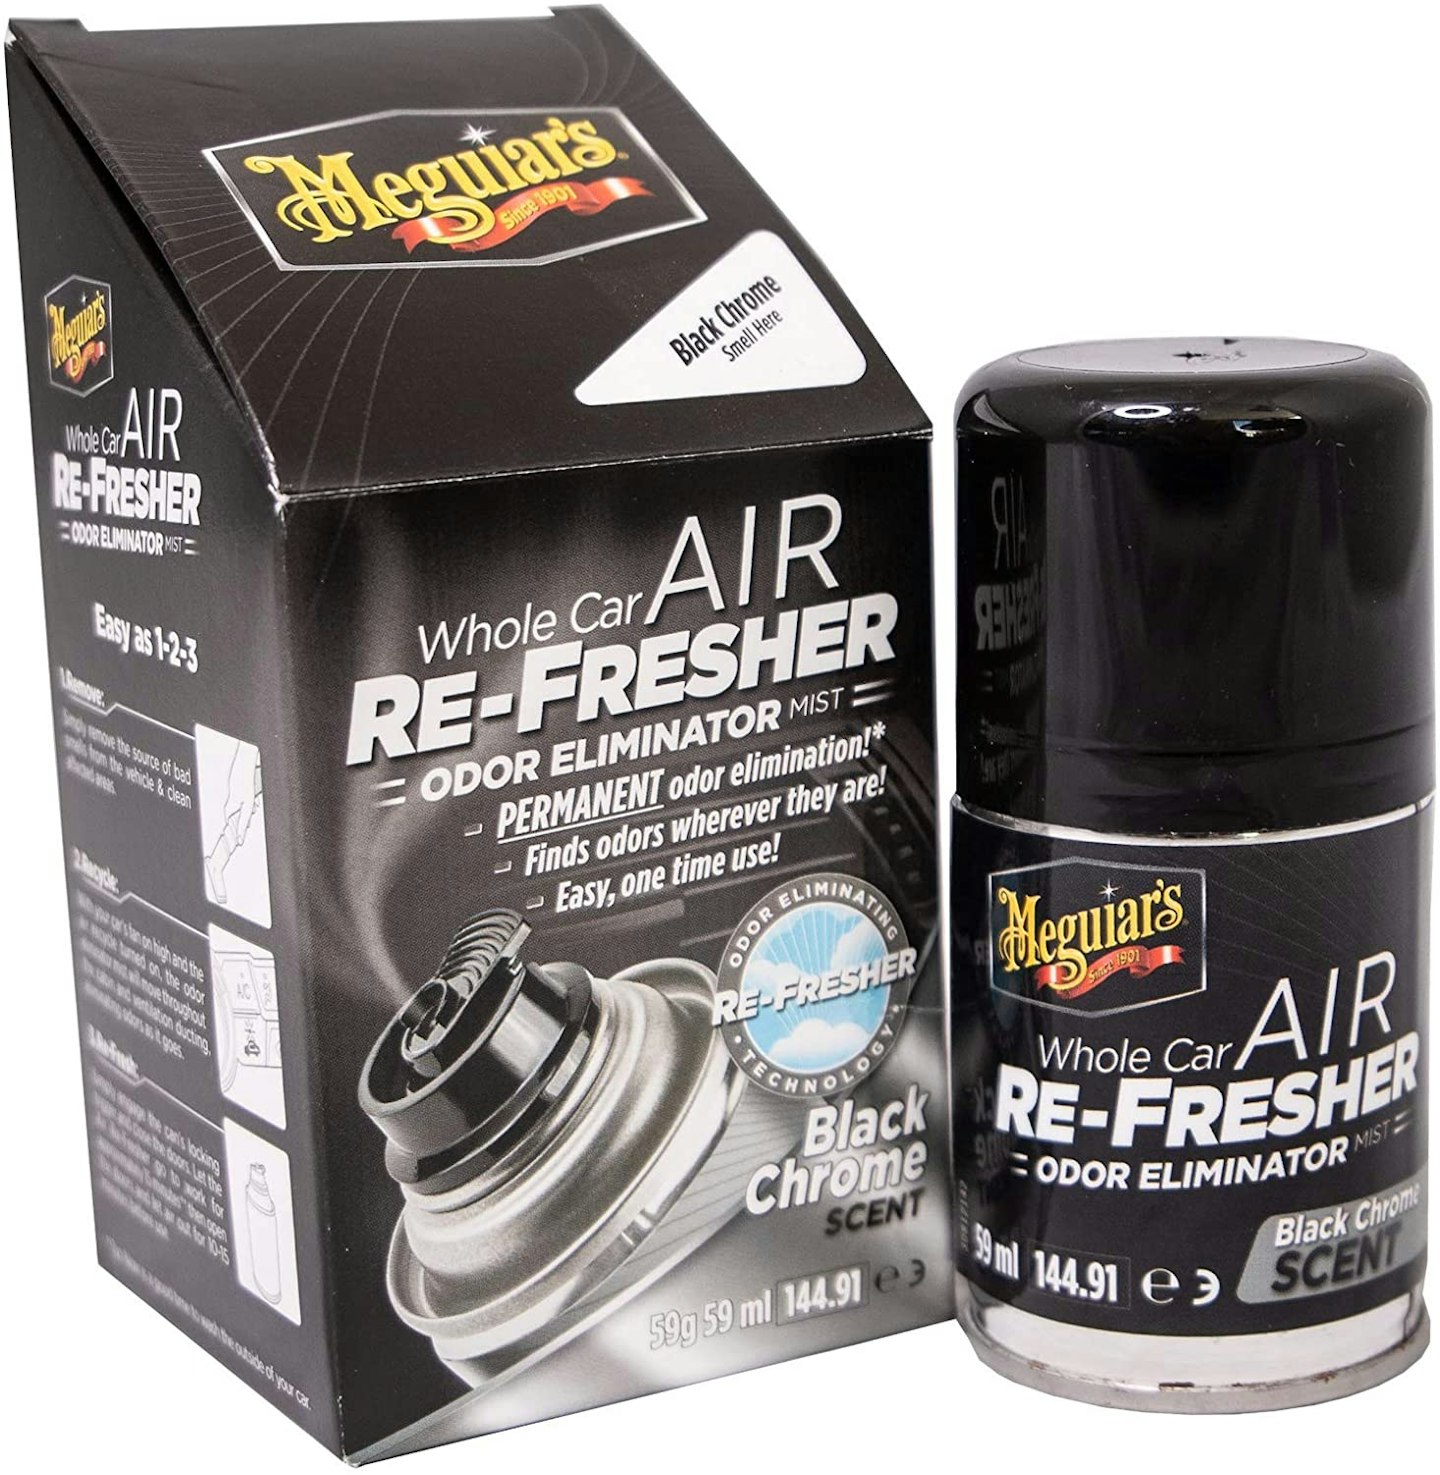 Merguiar's scent bomb car air freshener